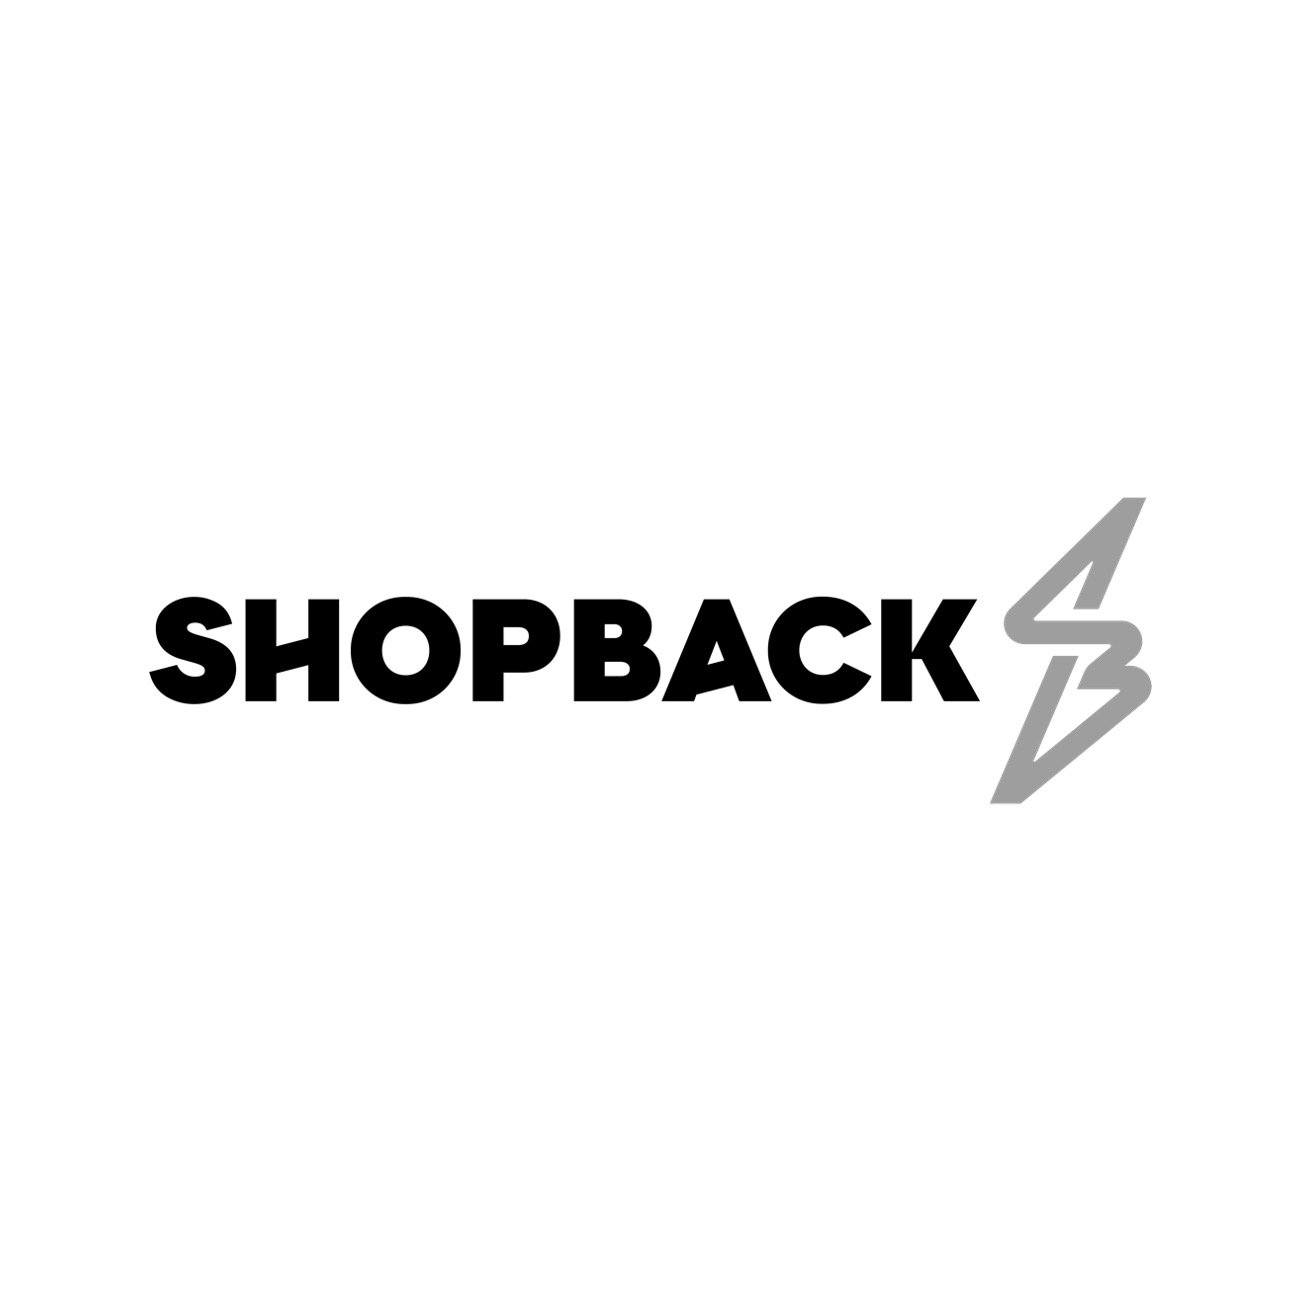 Shopback_Logo.jpg